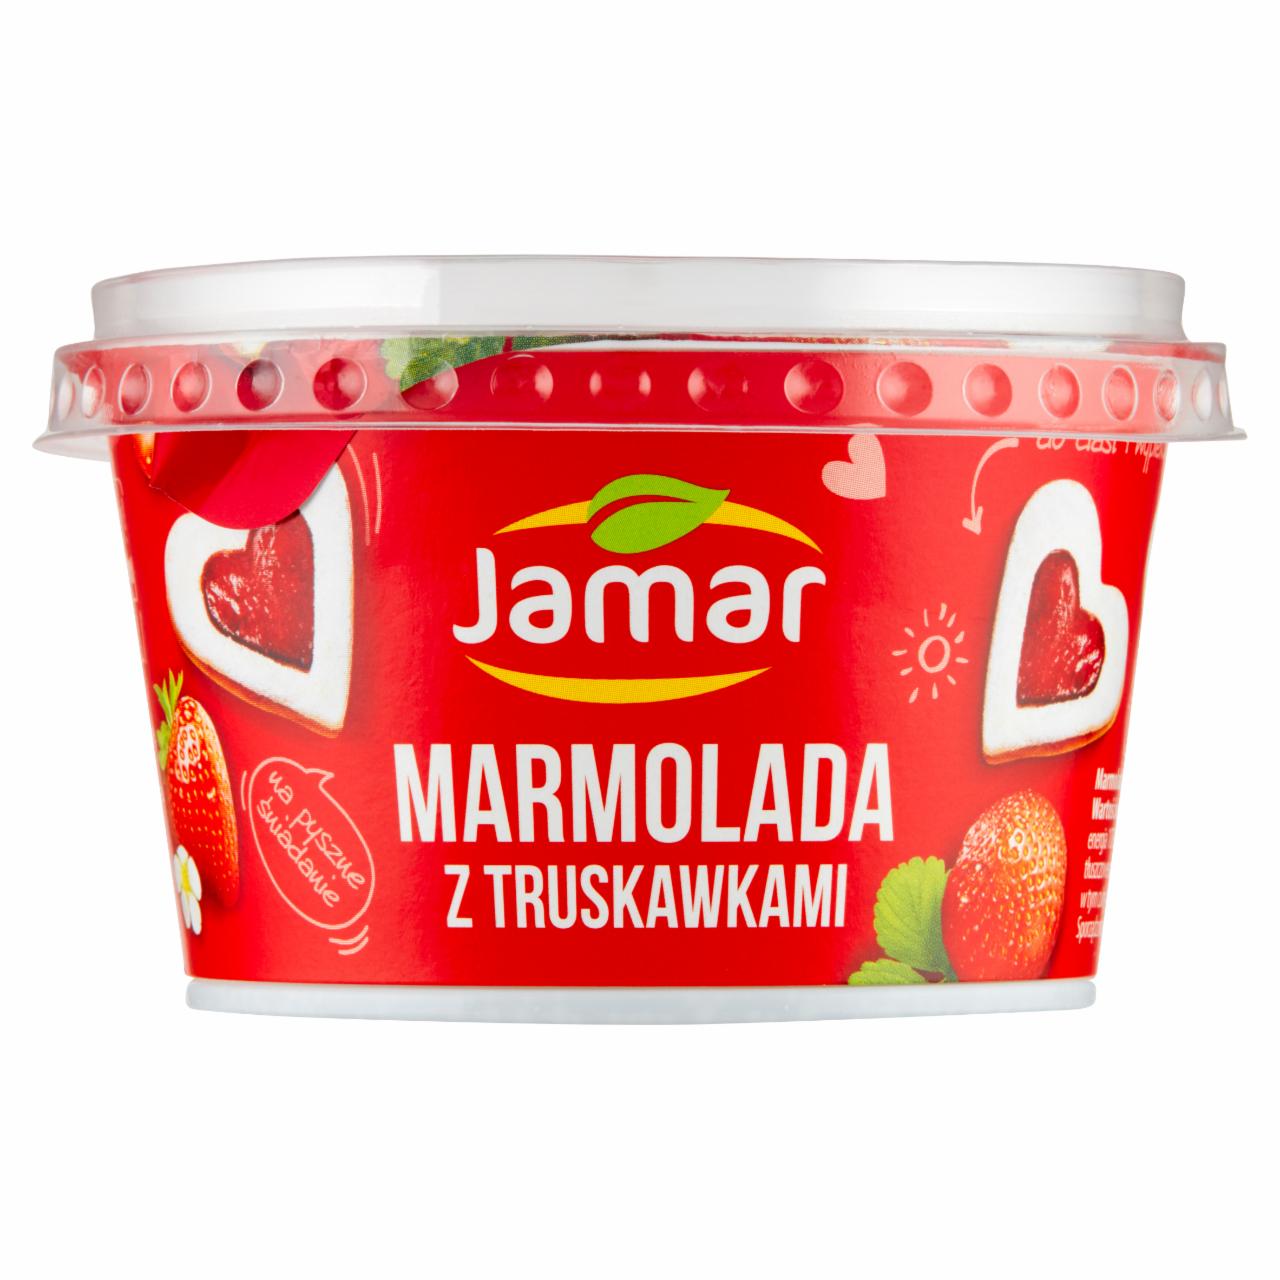 Zdjęcia - Jamar Marmolada z truskawkami 250 g